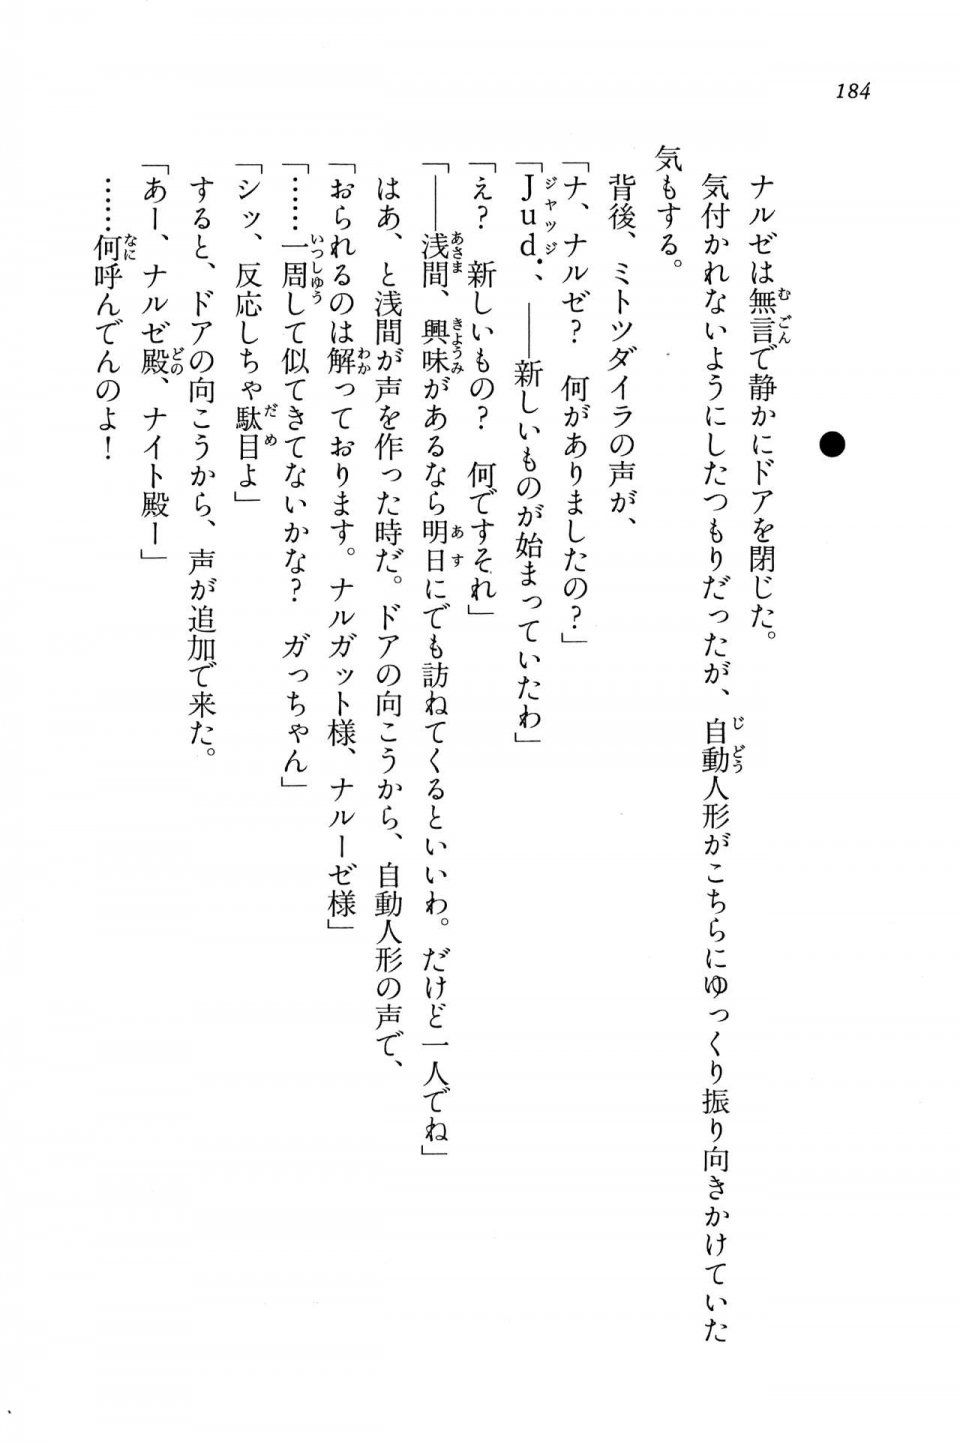 Kyoukai Senjou no Horizon BD Special Mininovel Vol 7(4A) - Photo #188